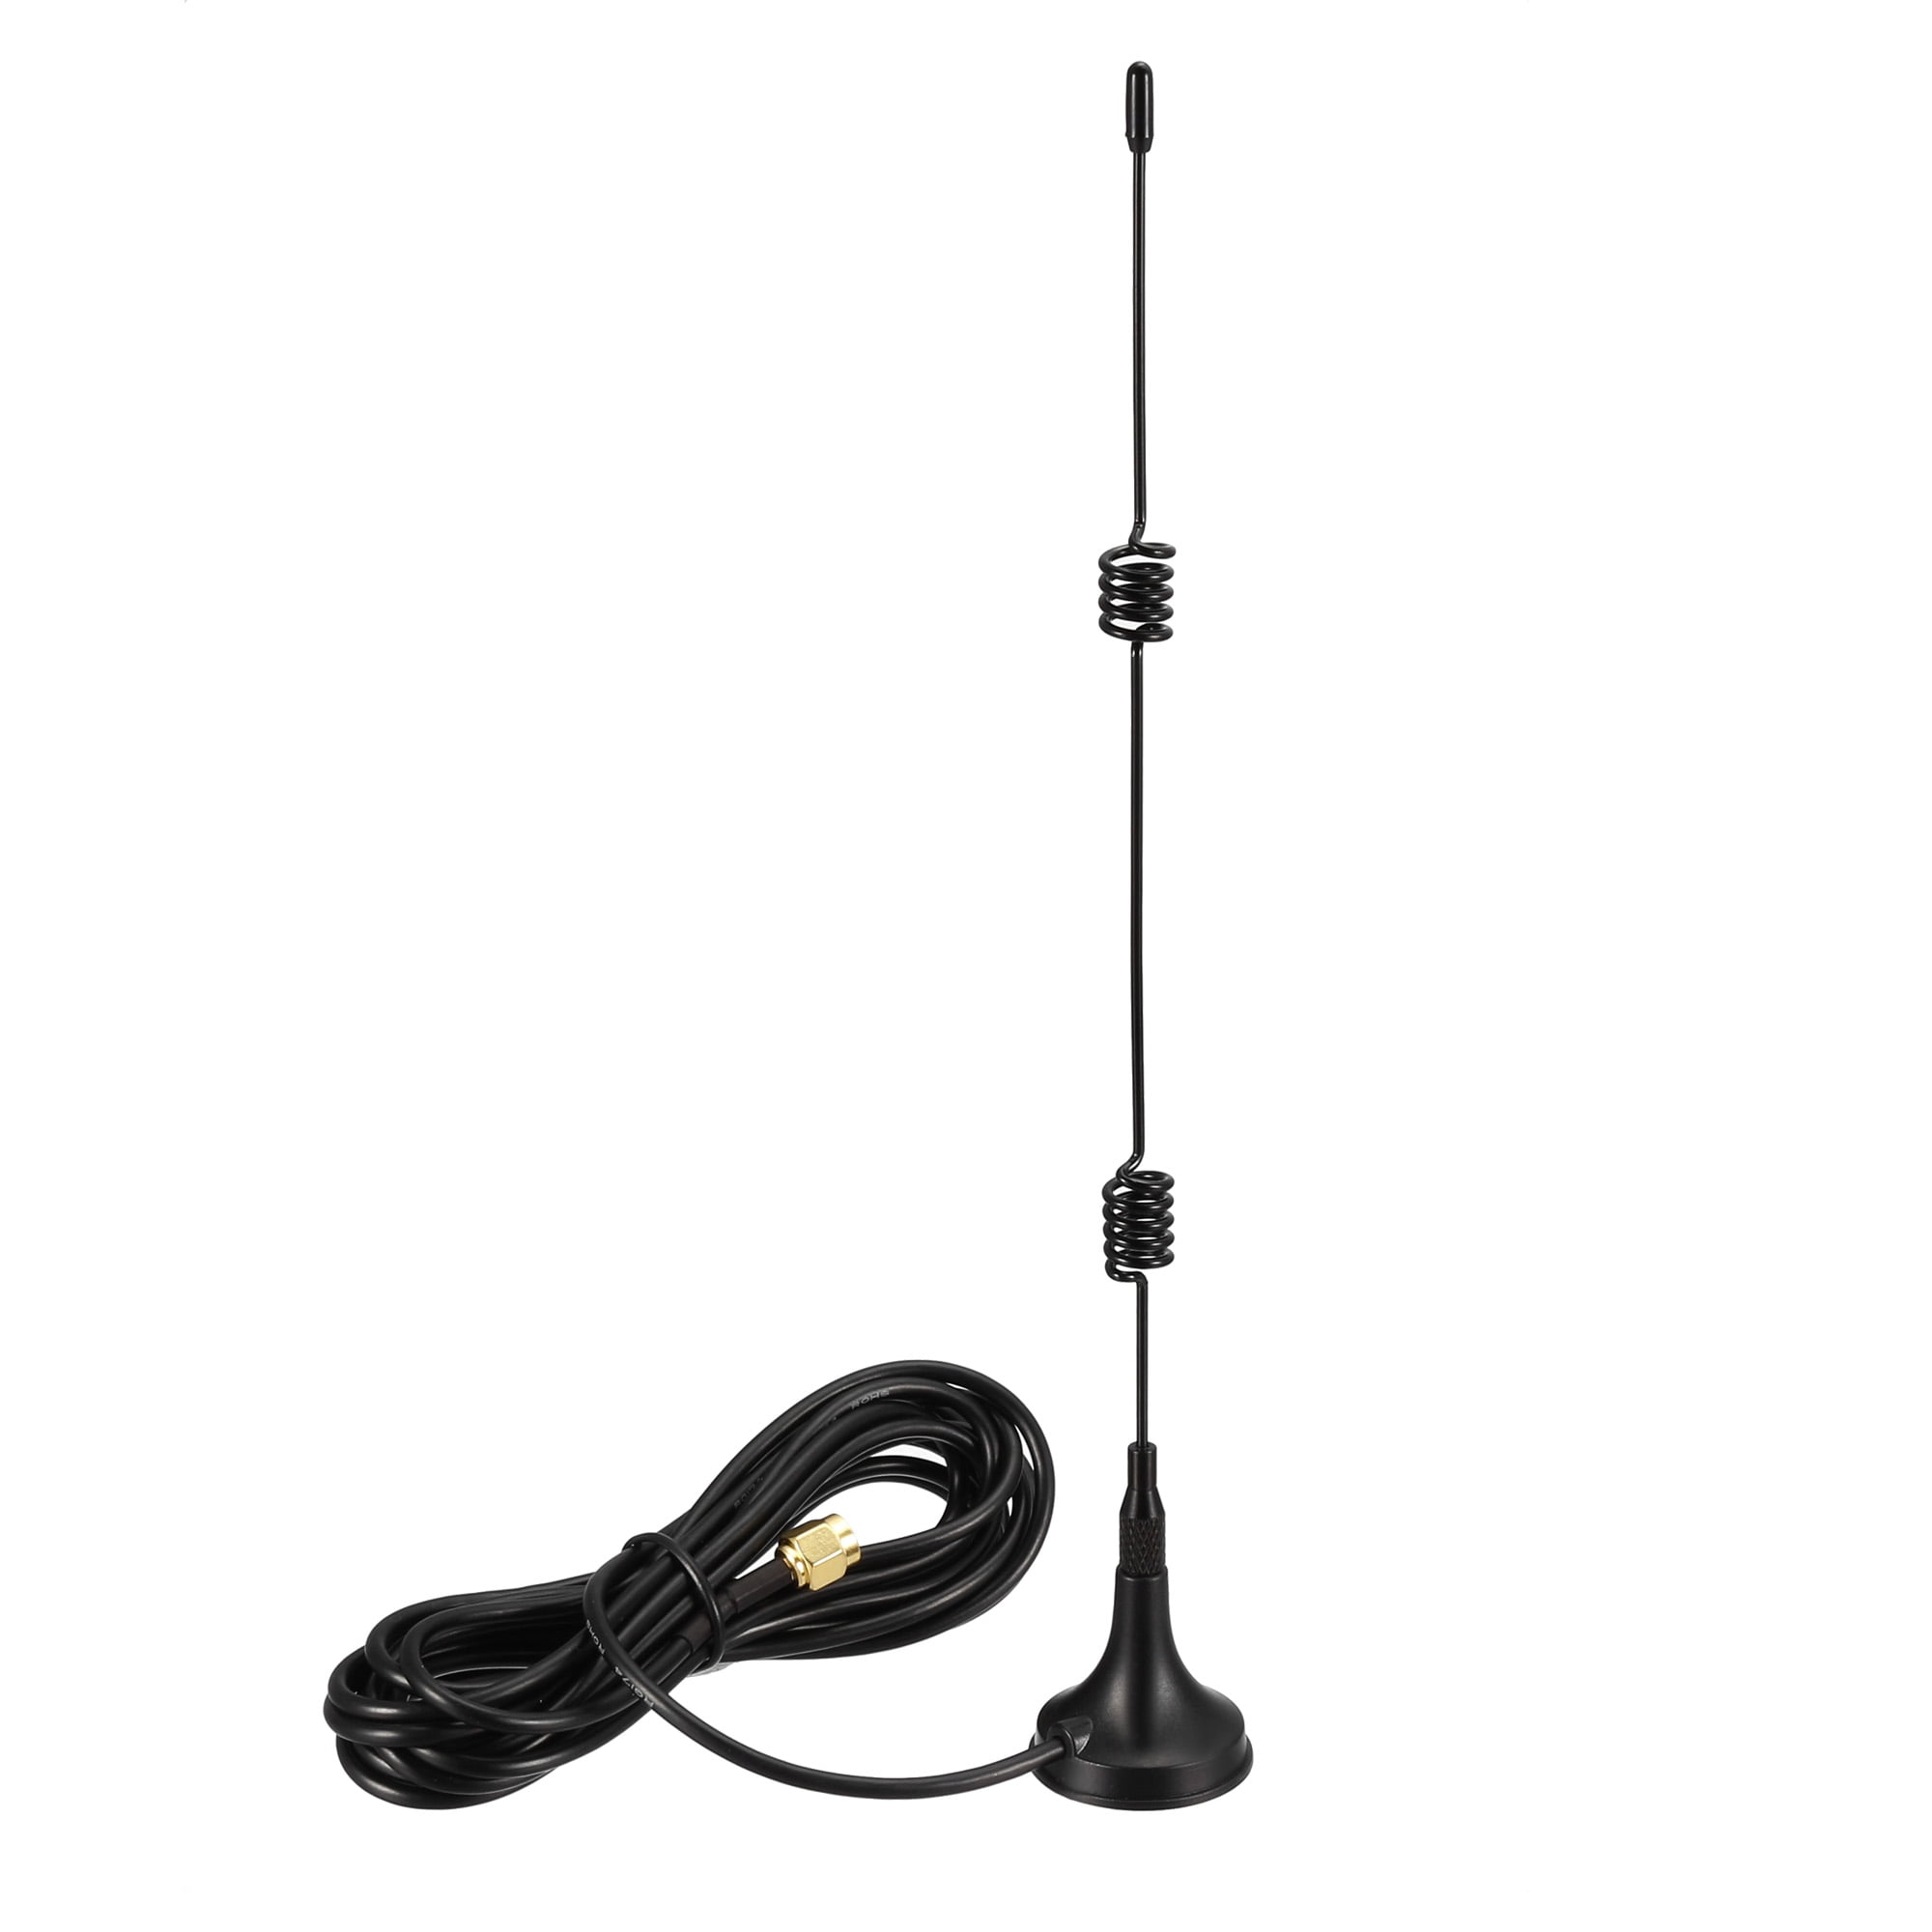 PRINDIY 8dBi RG174 RP-SMA mâle 2400 MHz câble de rallonge 1 mètre Antenne WiFi avec antenne Bluetooth Zigbee avec Base magnétique Compatible